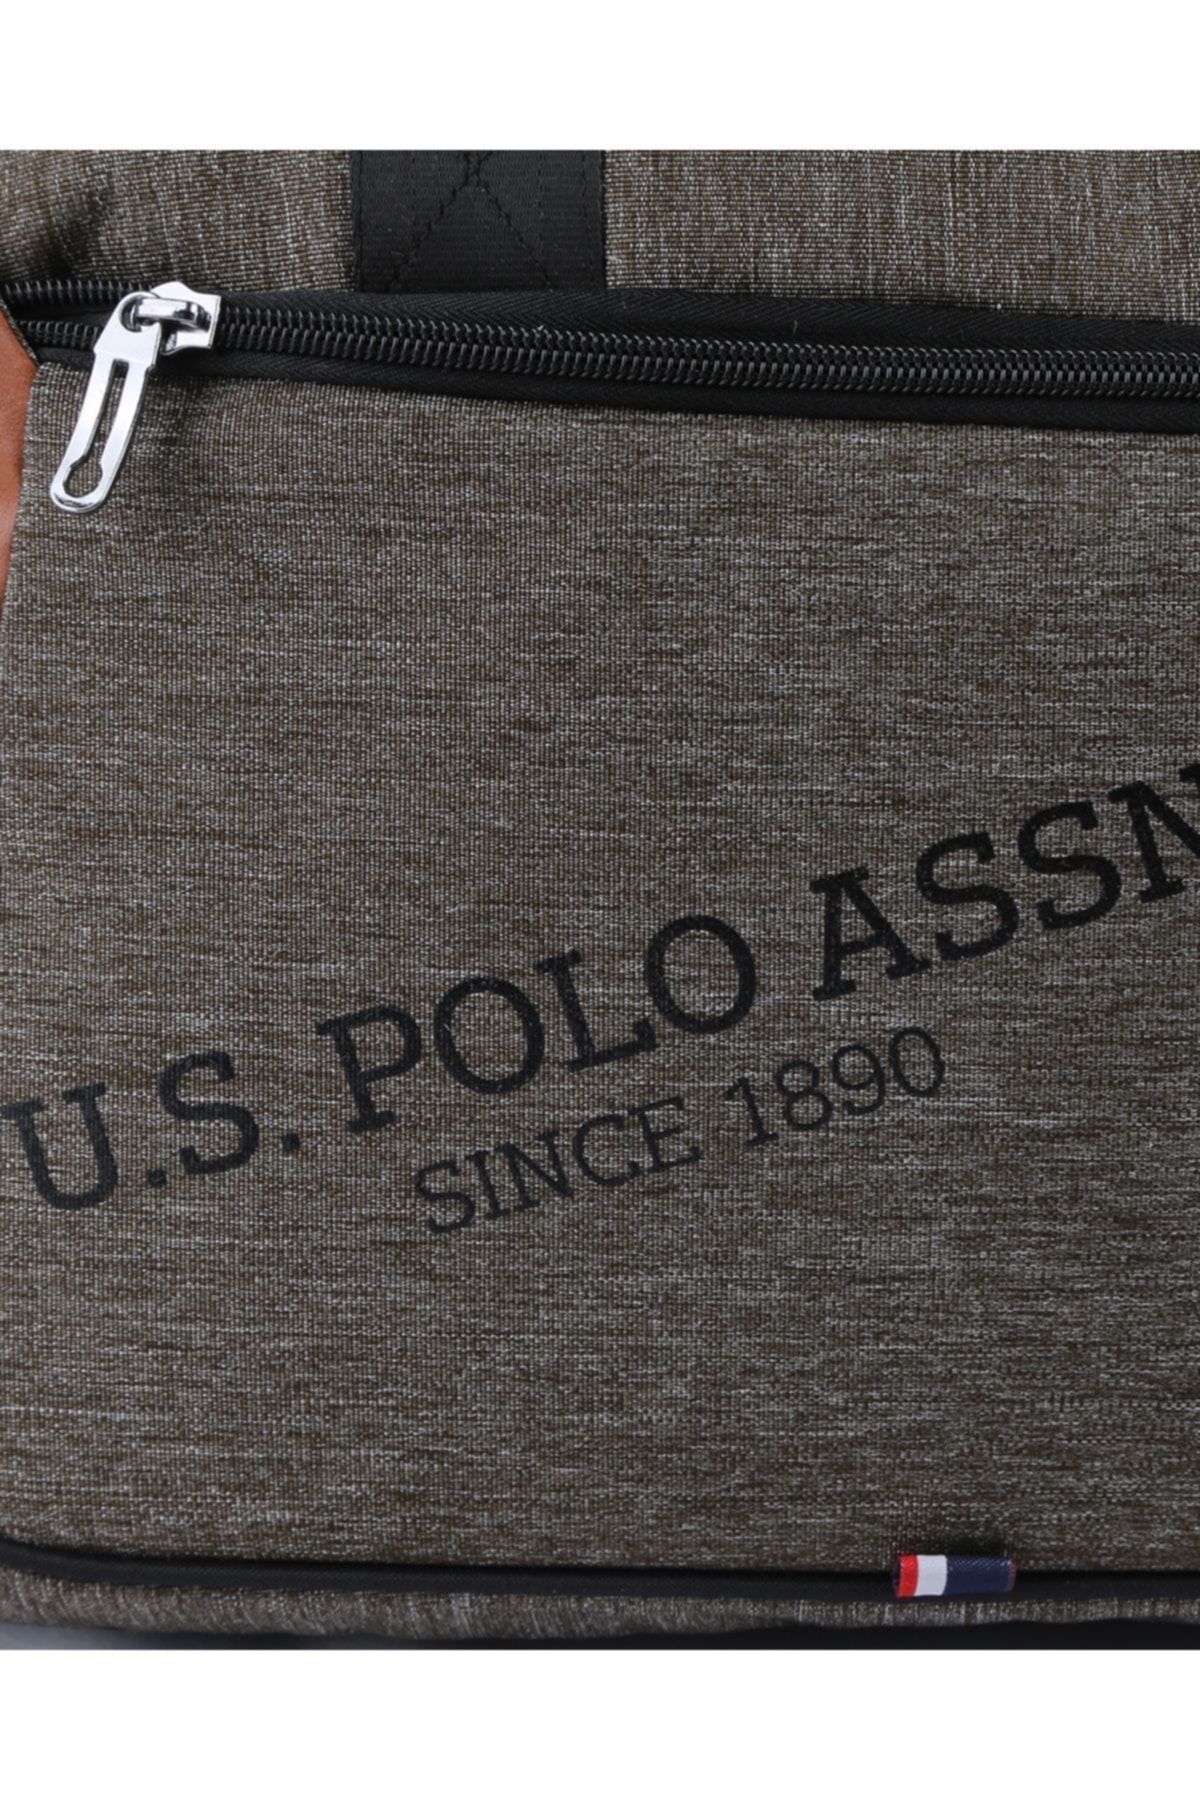 U.S. Polo Assn. Unisex Duffle Küçük Boy Seyahat Çantası Plduf8372